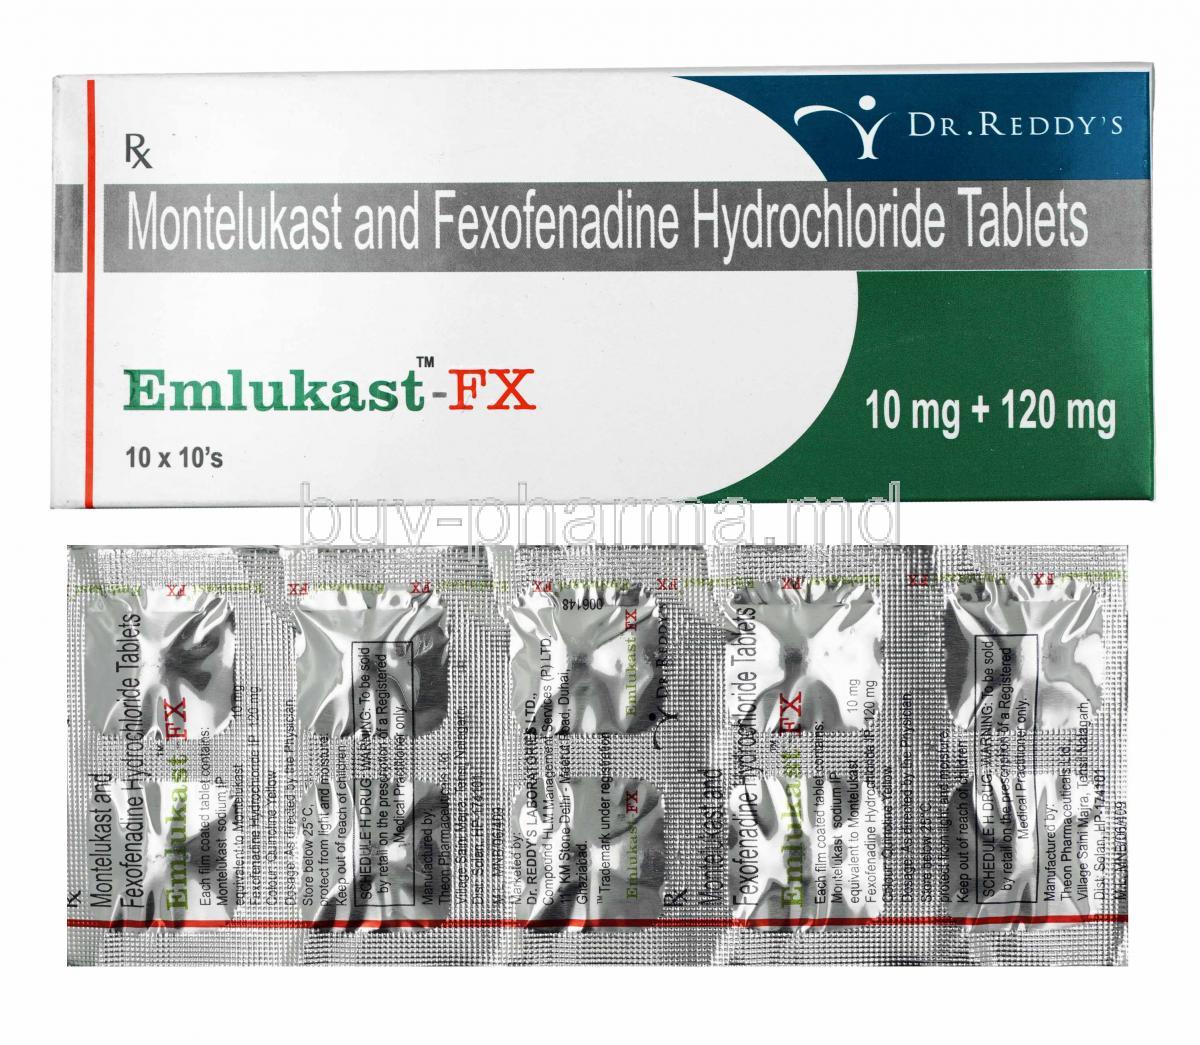 Emlukast-FX, Montelukast and Fexofenadine box and tablets